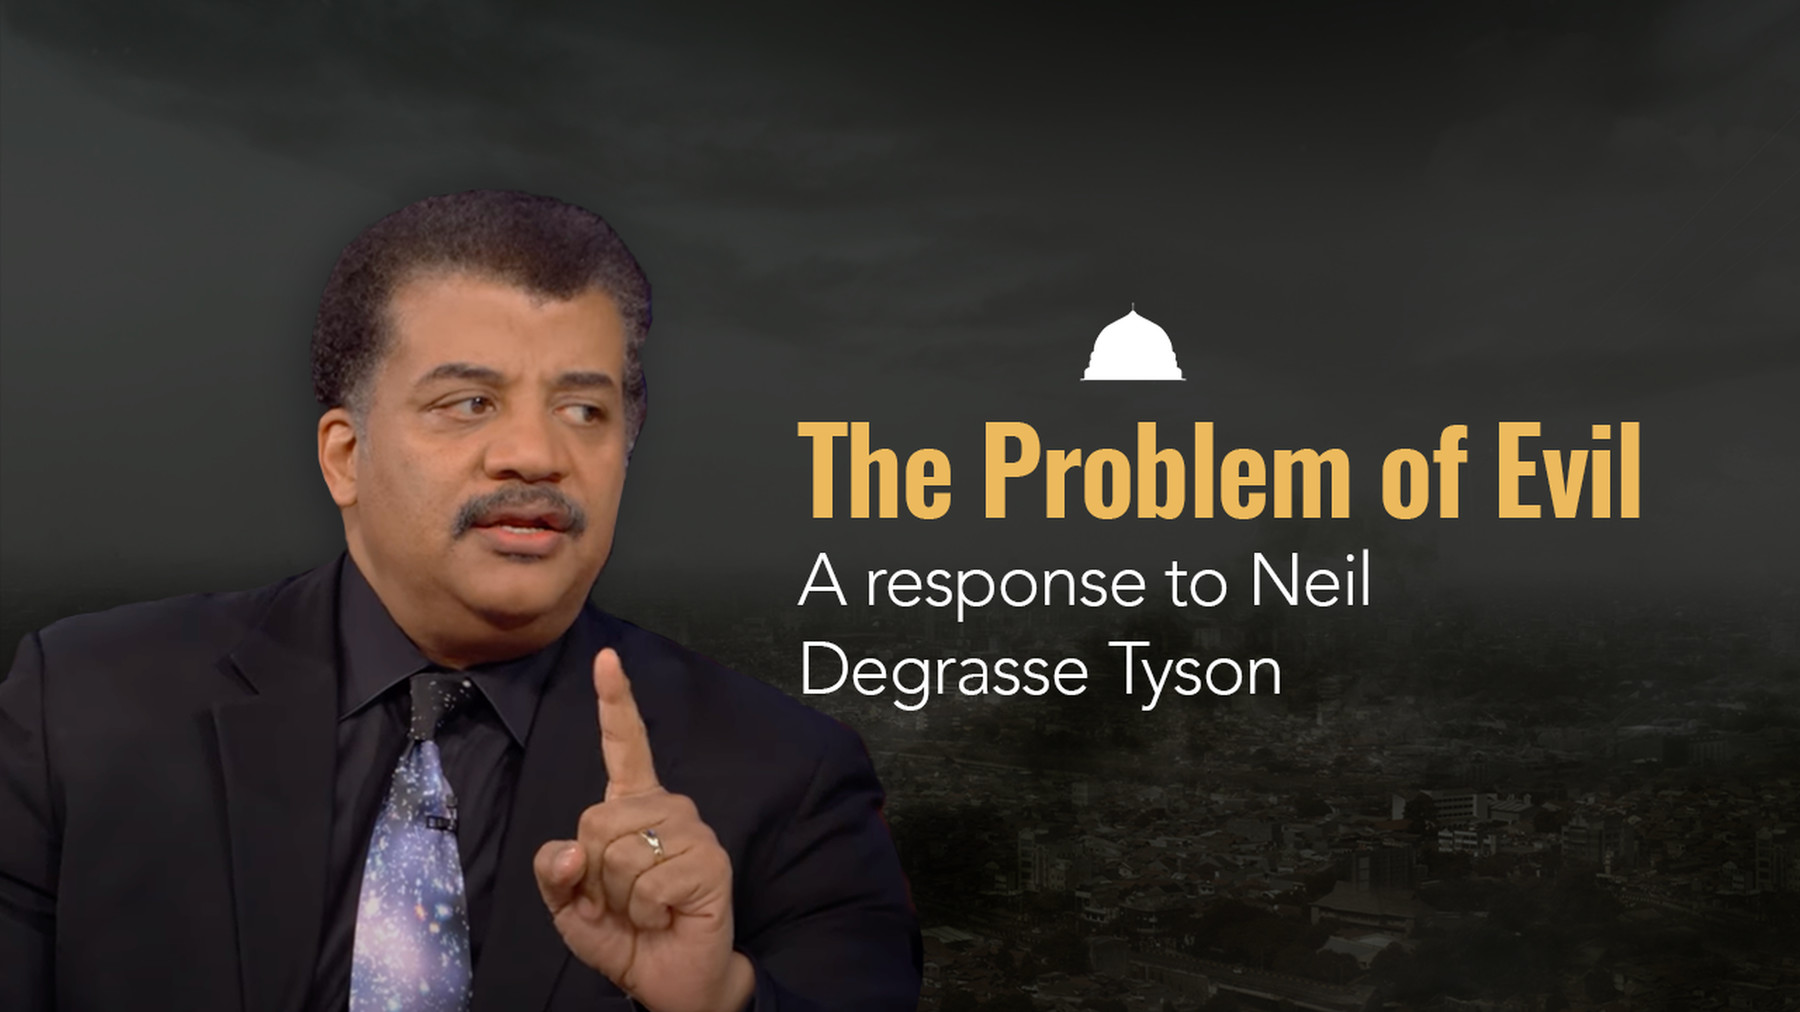 The Problem of Evil A response against Neil Degrasse Tyson